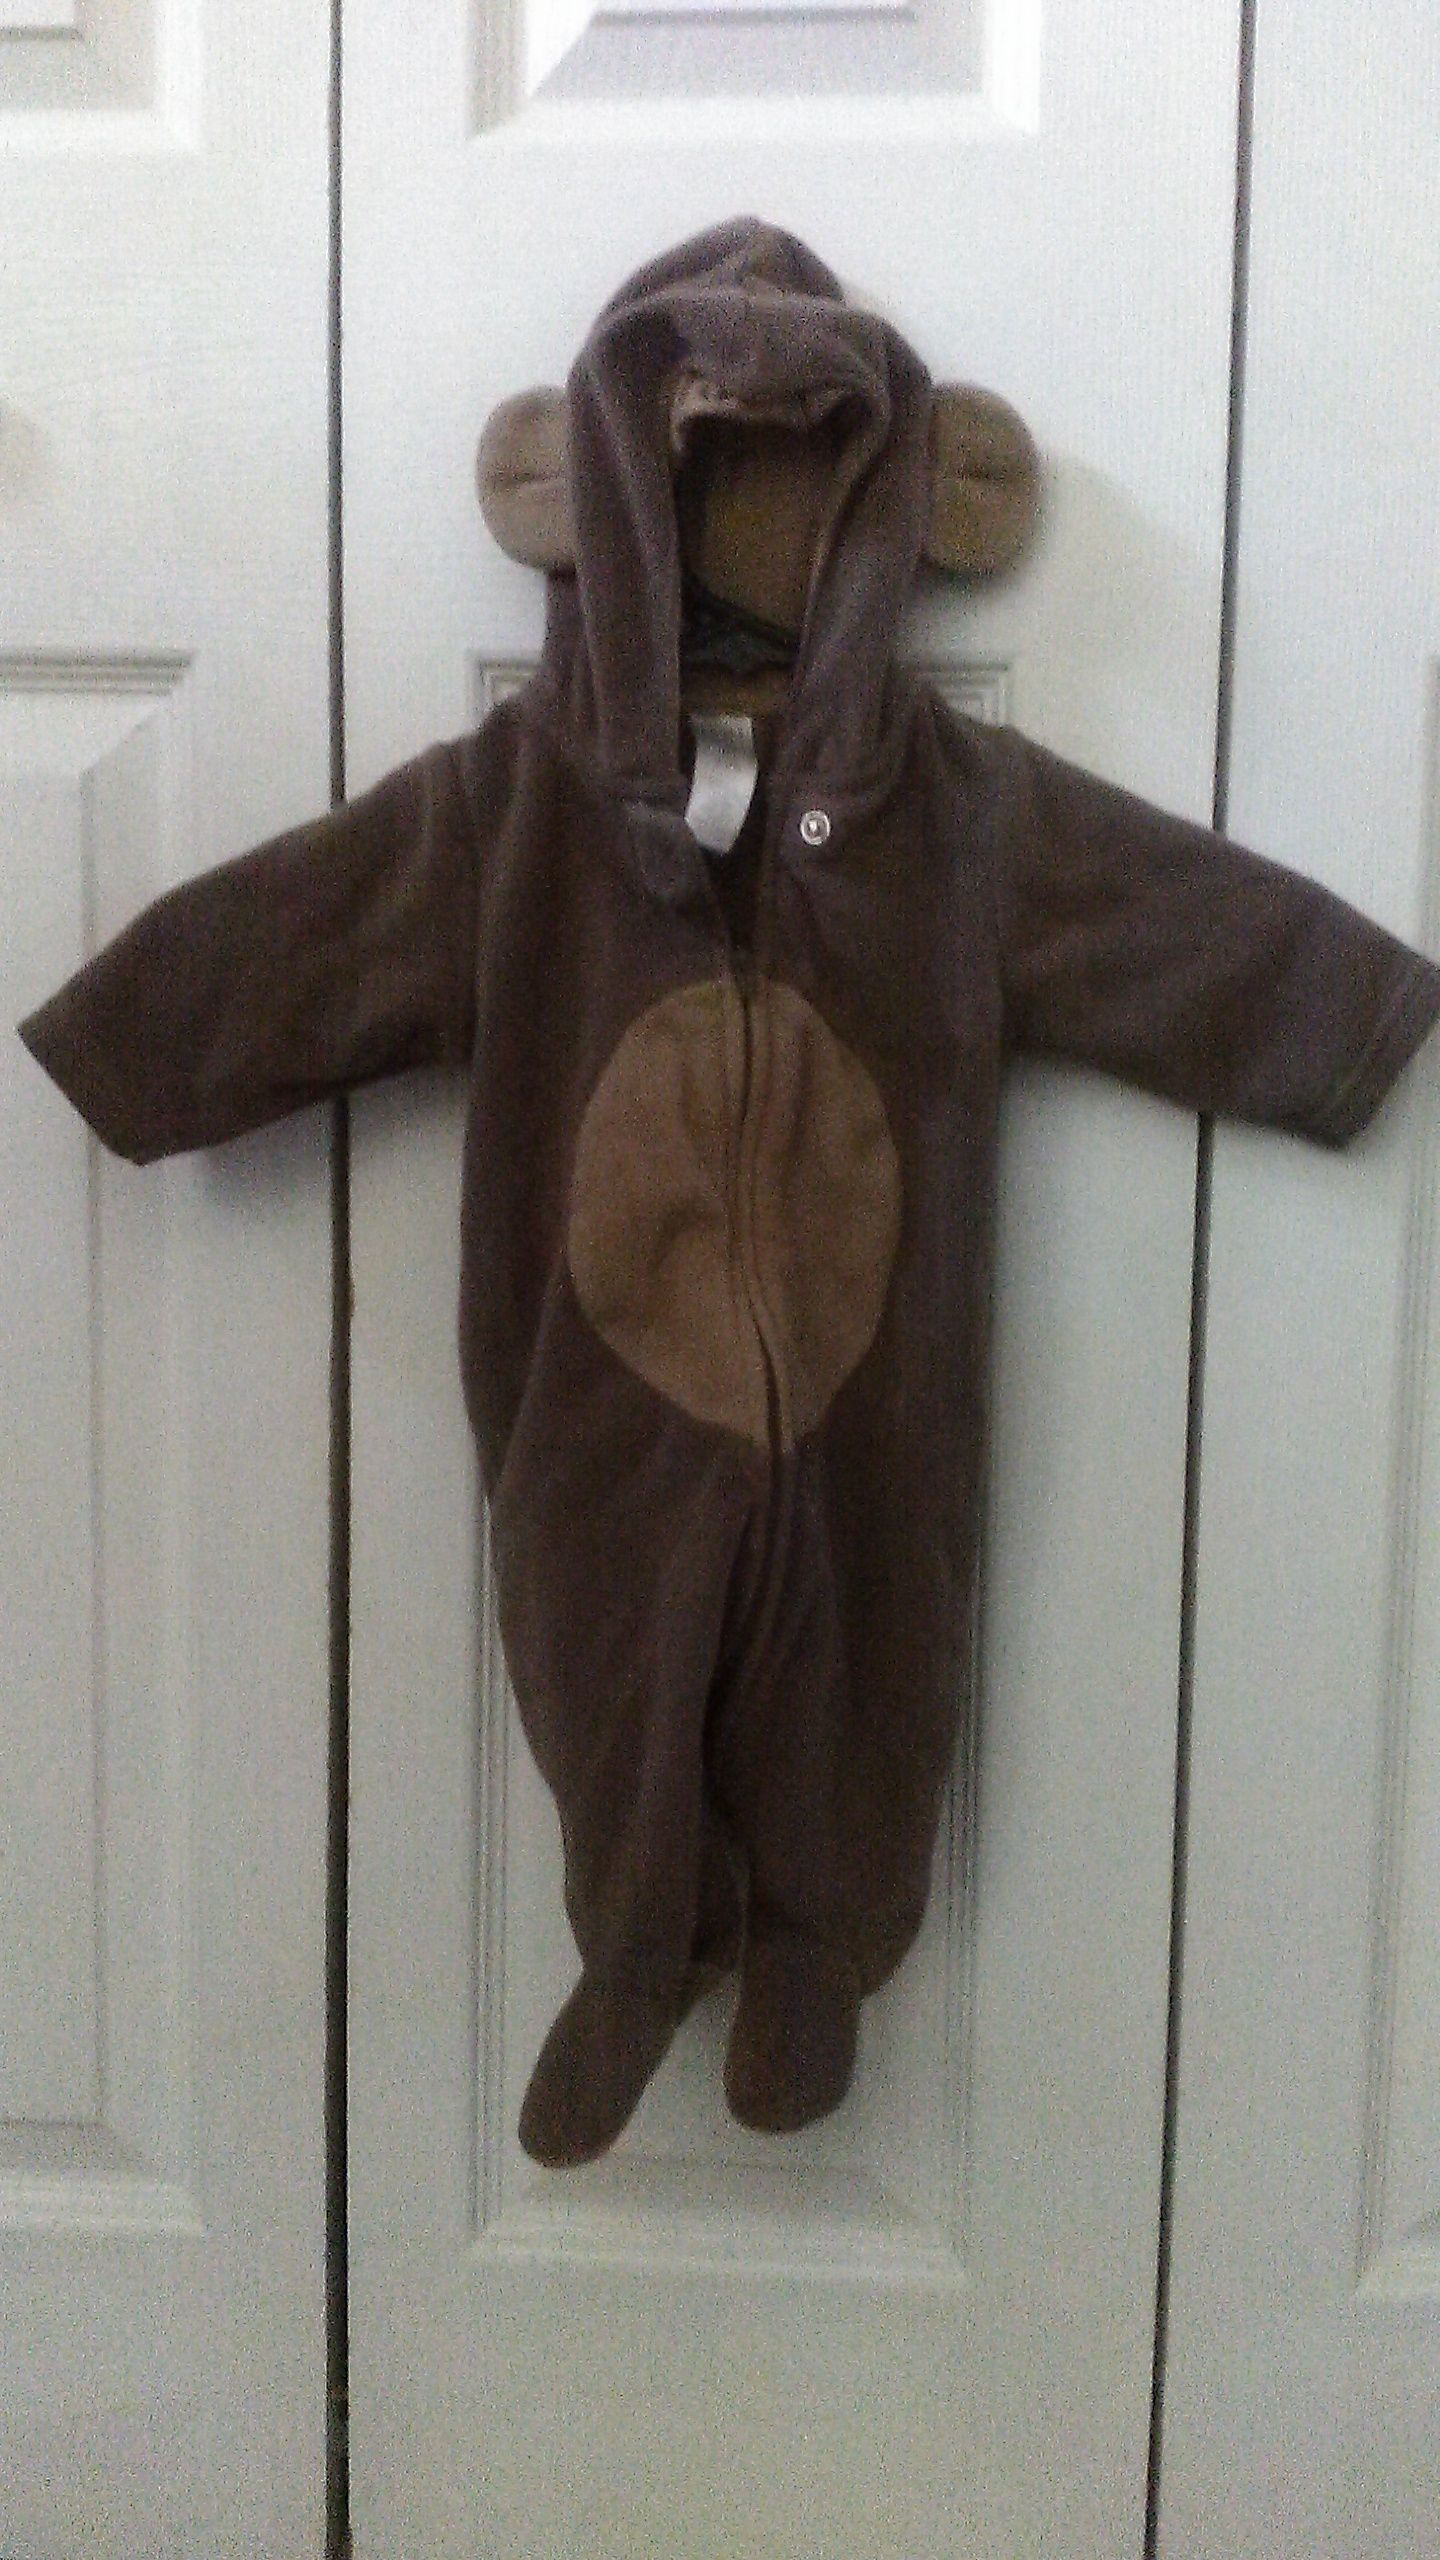 Baby monkey costume